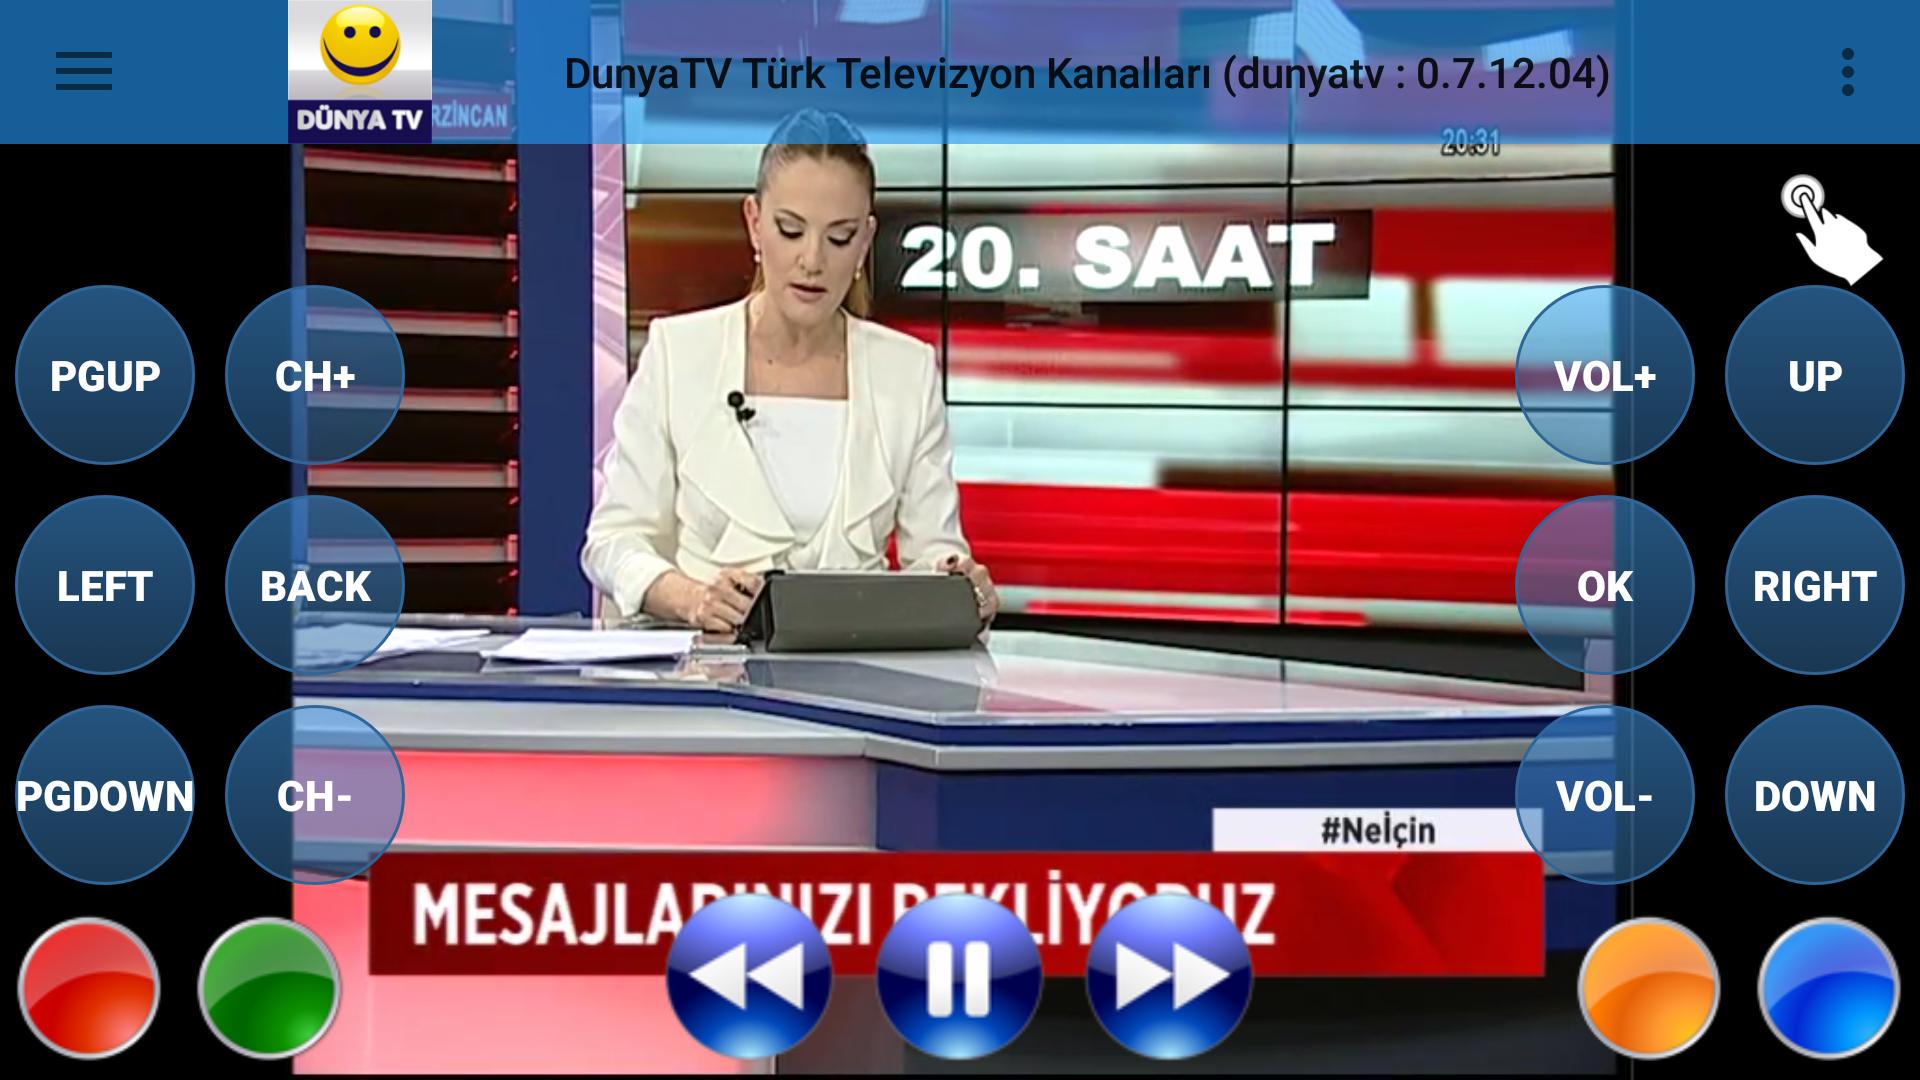 Tr turkish tv. Туркиш ТВ. Turkish TV channels. Turk TV. TLC (Turkish TV channel).